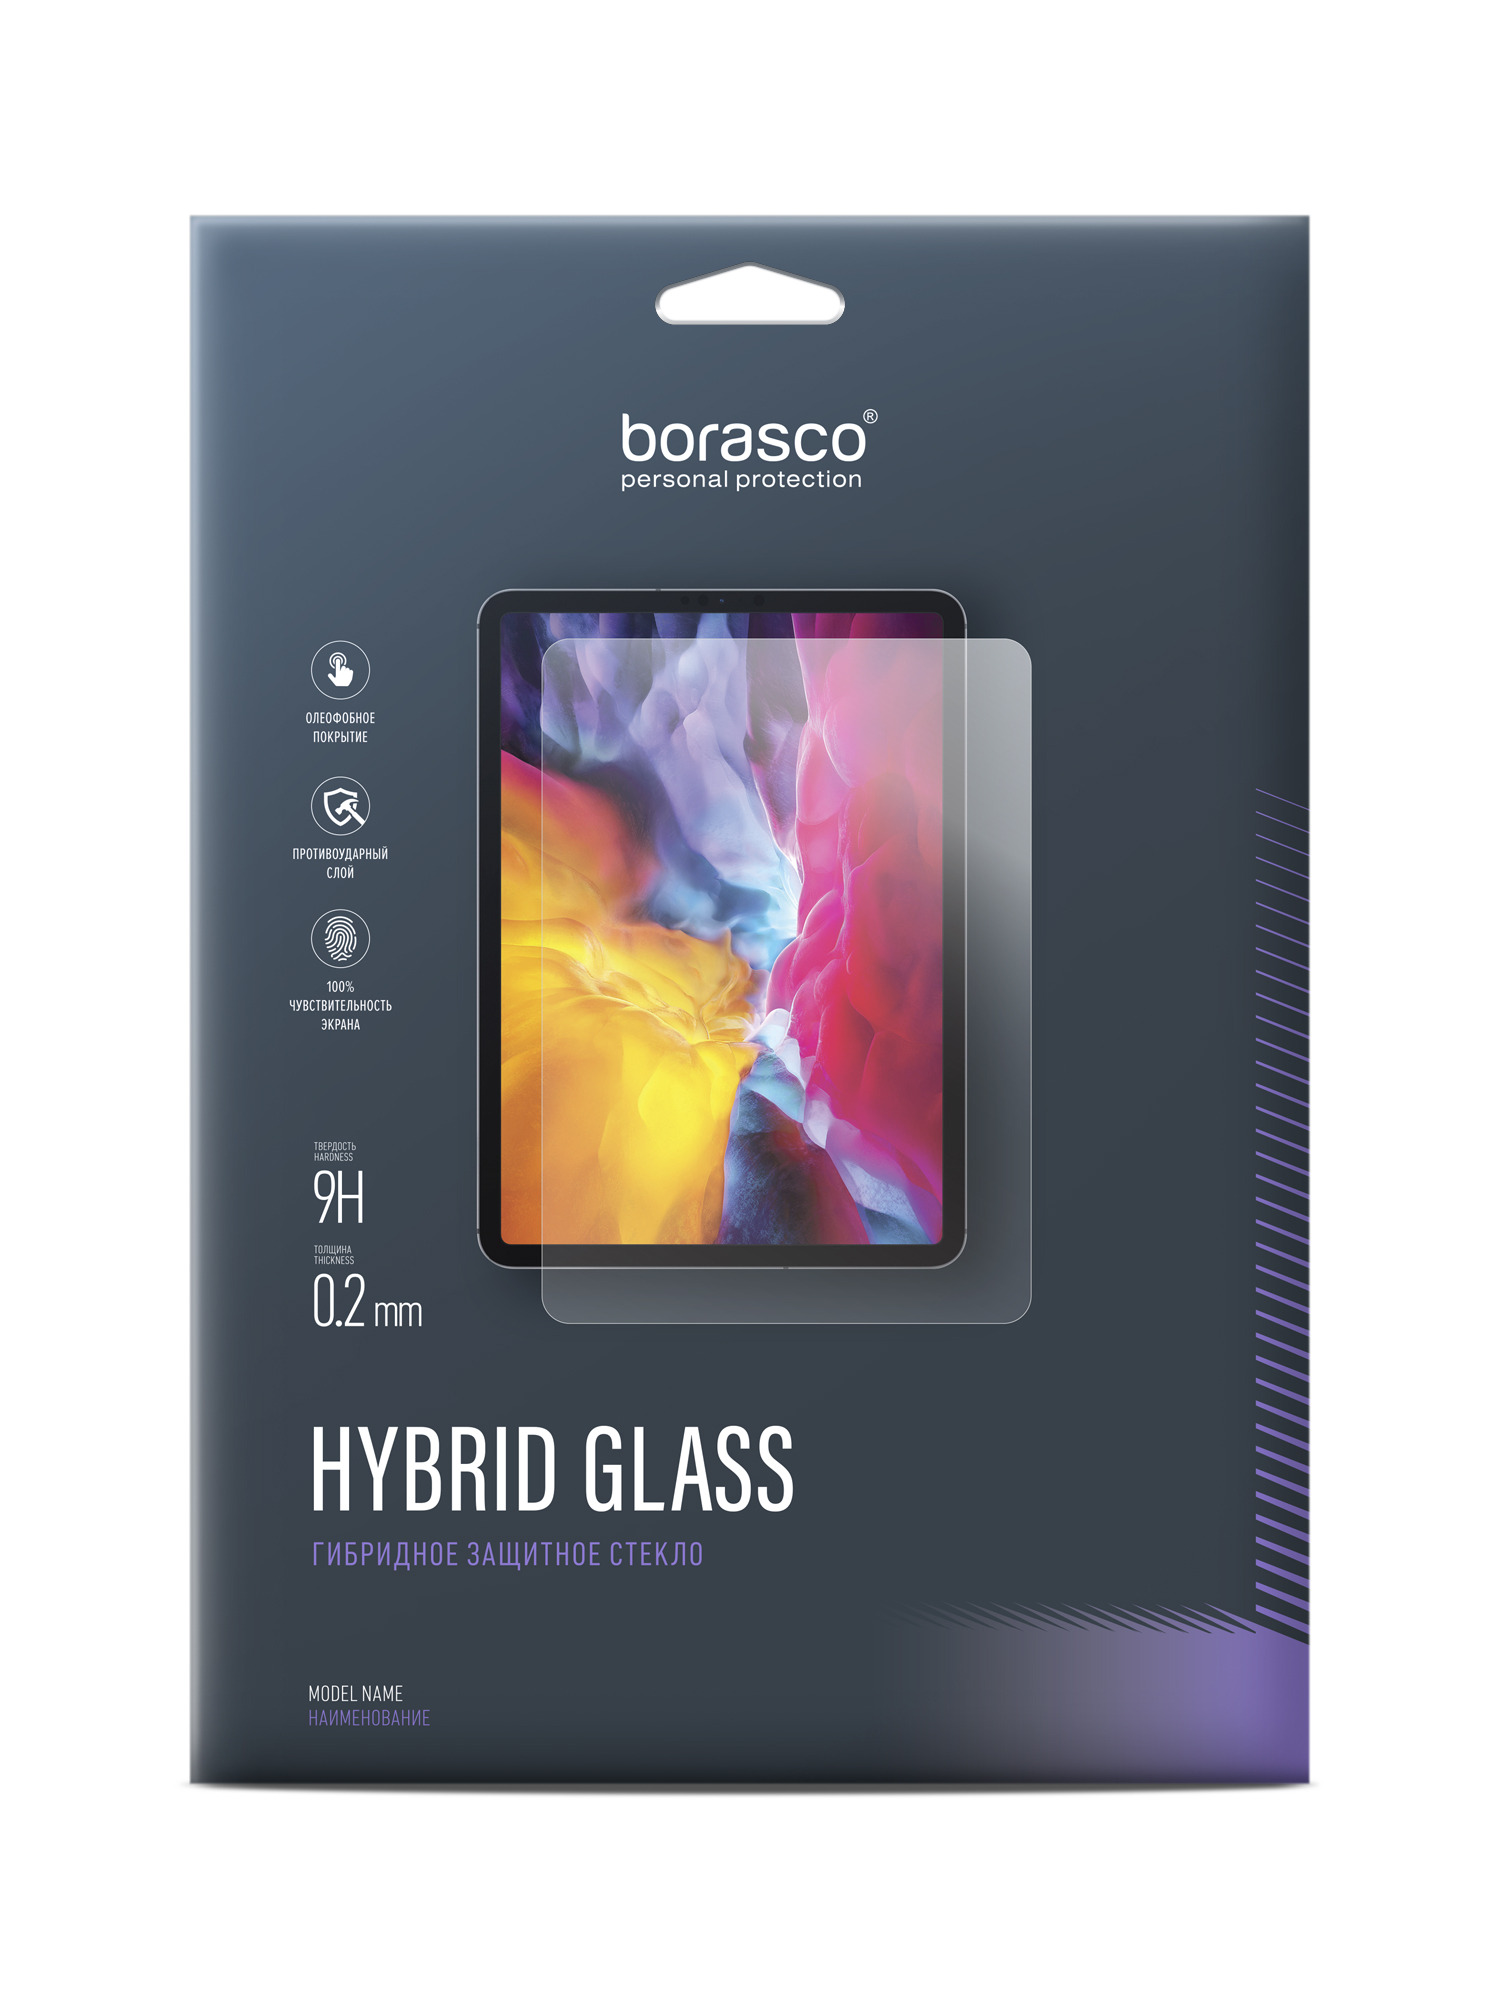 Защитное стекло Hybrid Glass для Huawei MediaPad M5 Lite 8.0 защитное стекло для камеры hybrid glass для huawei p30 lite